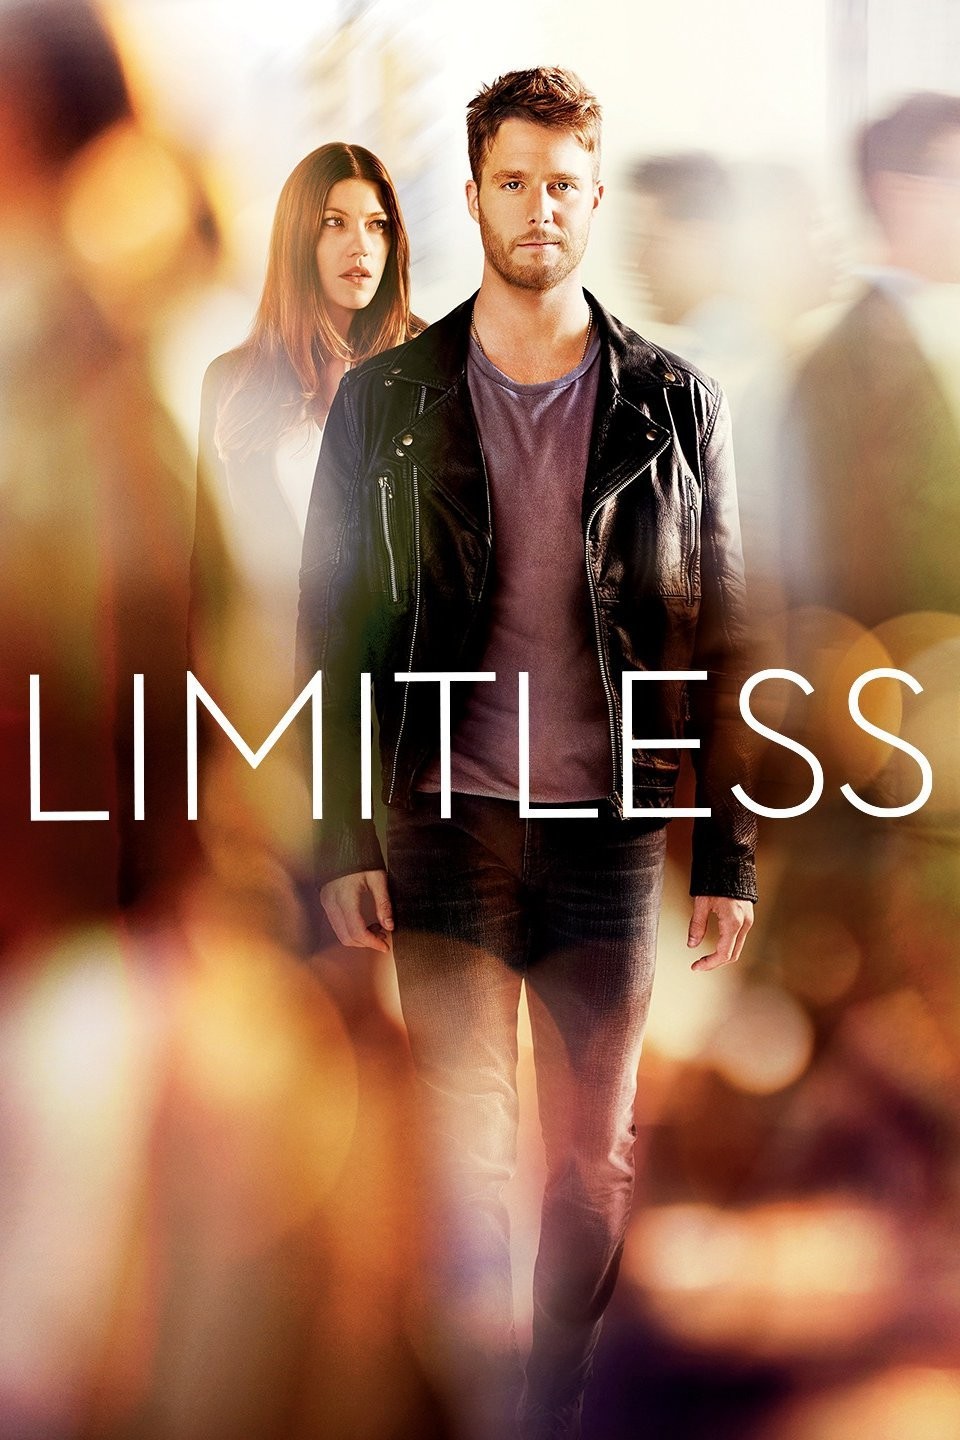 Limitless (2011) - Videos - IMDb